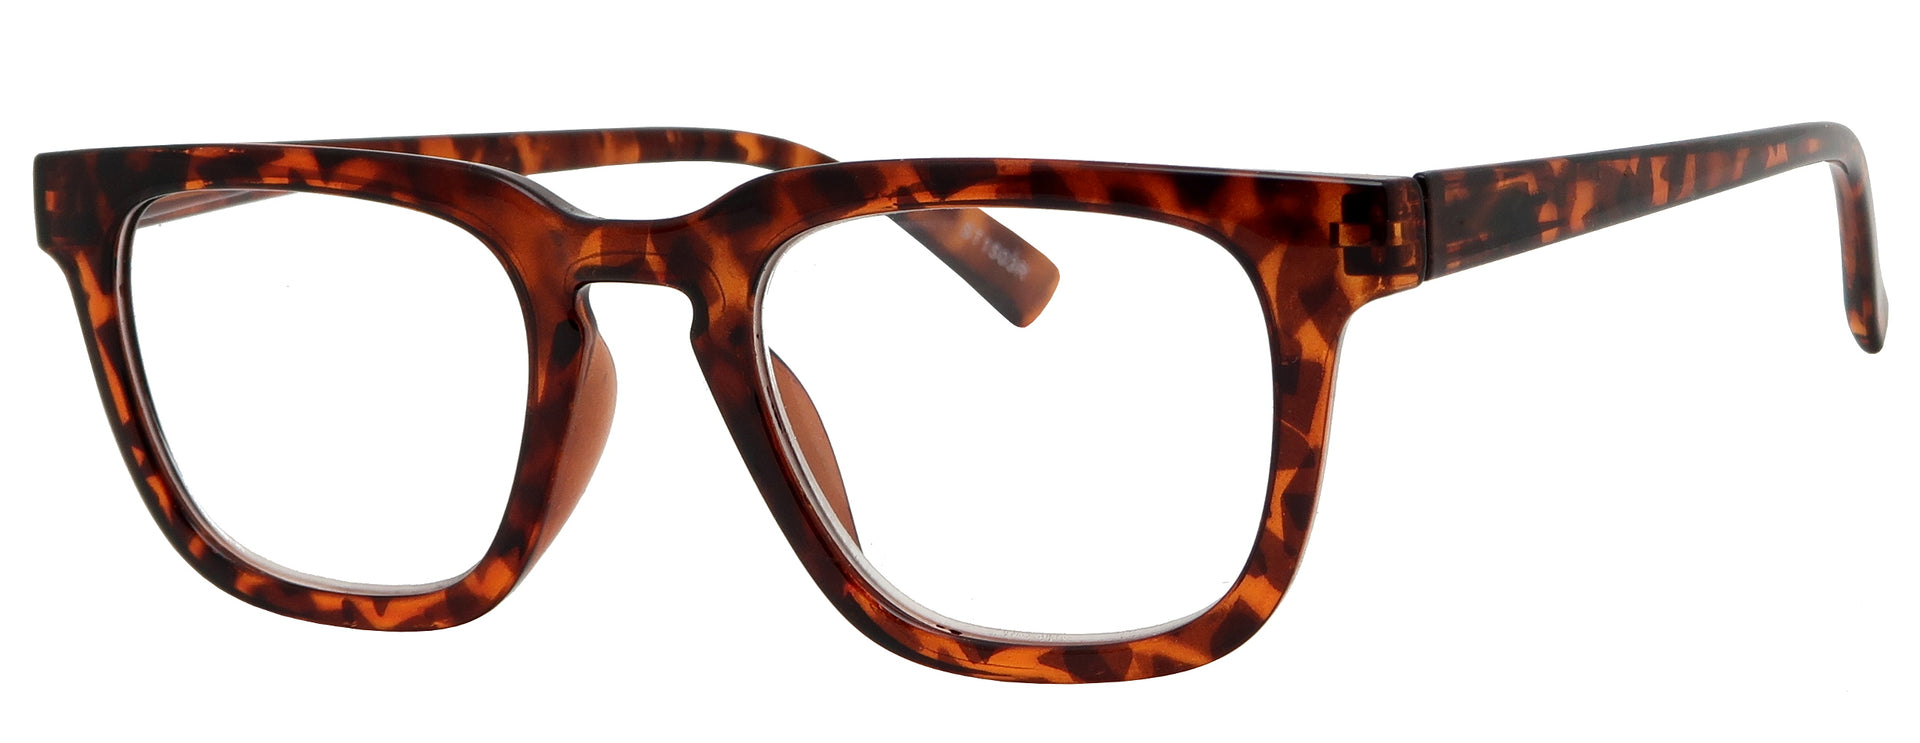 ST1503R -  Wholesale Unisex Basic Square Style Reading Glasses in Tortoise